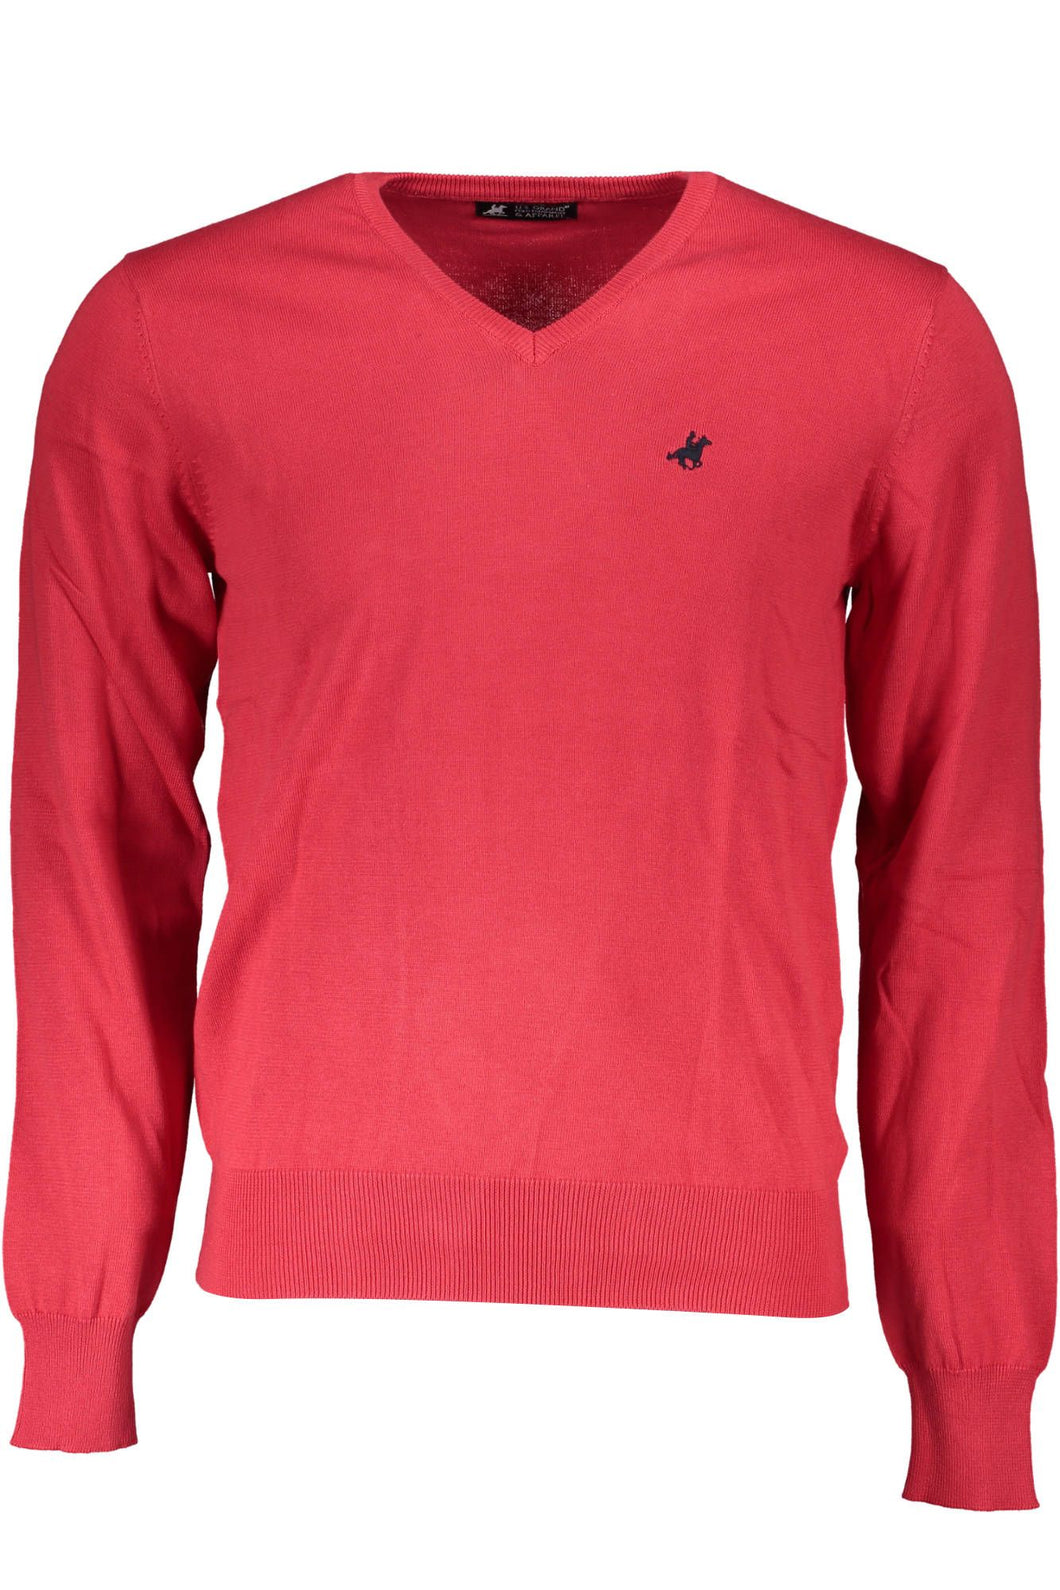 U.S. Grand Polo Red Cotton Sweater